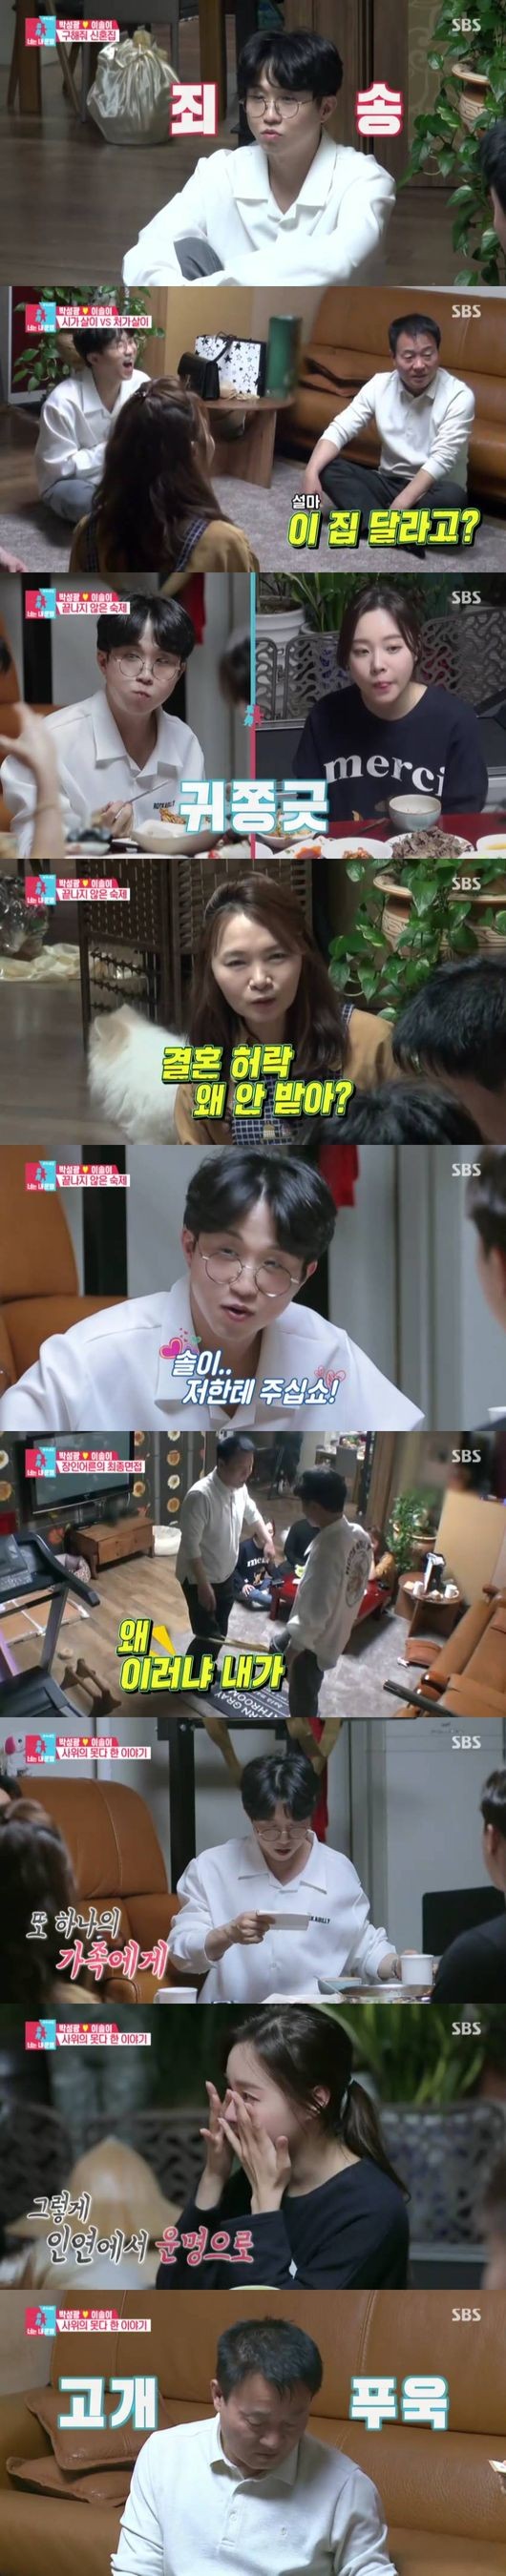 SBS ‘동상이몽2-너는 내 운명’ 방송 화면.